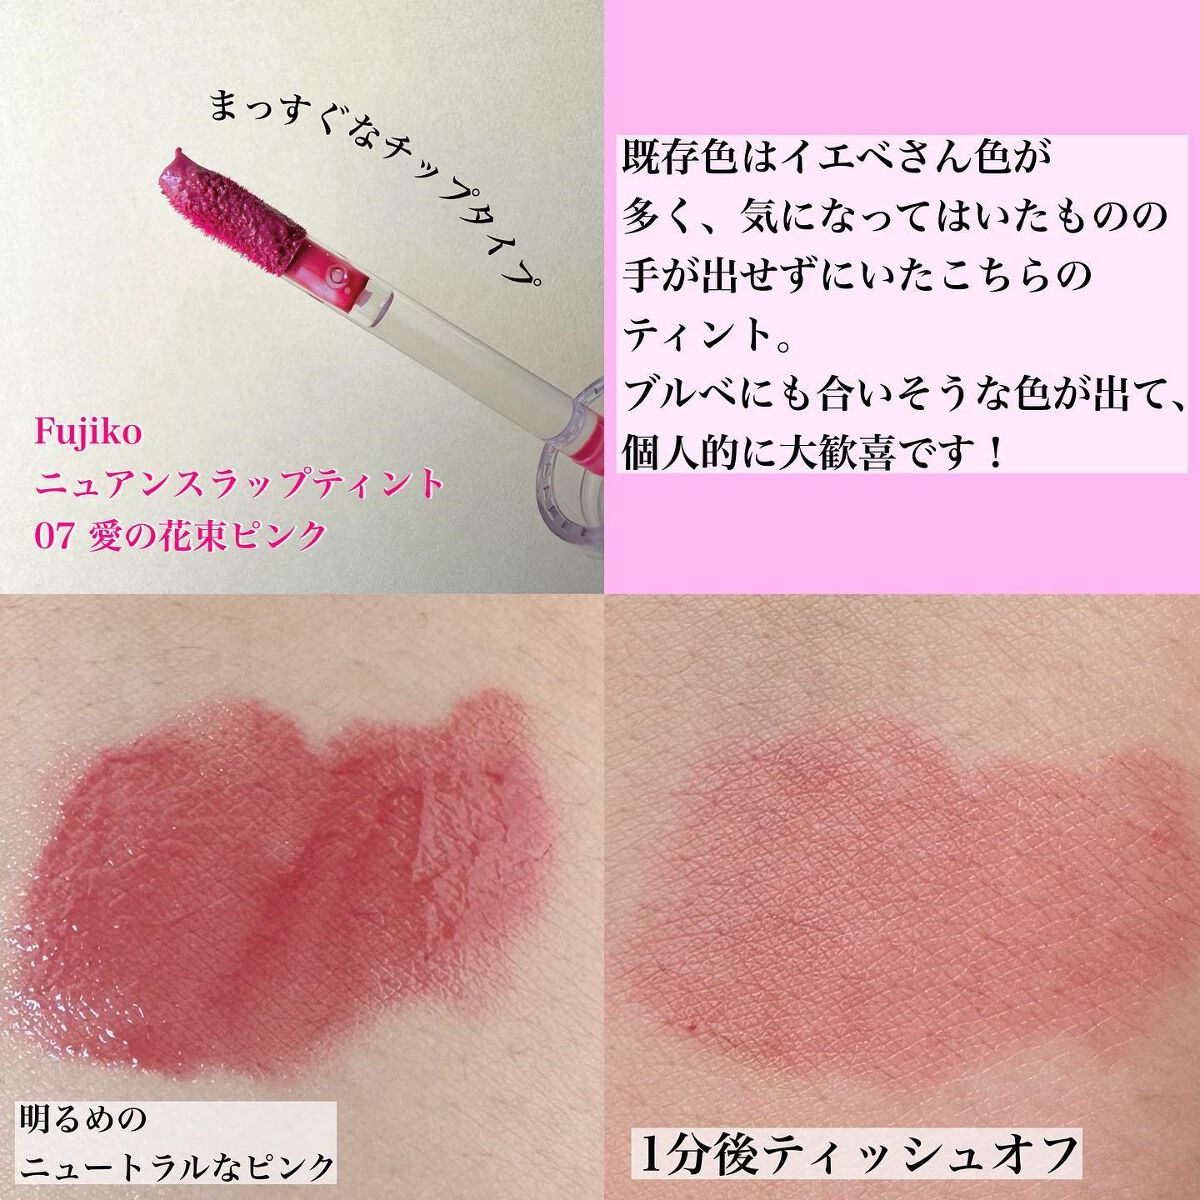 Fujiko（フジコ） ニュアンスラップティント 07 愛の花束ピンク